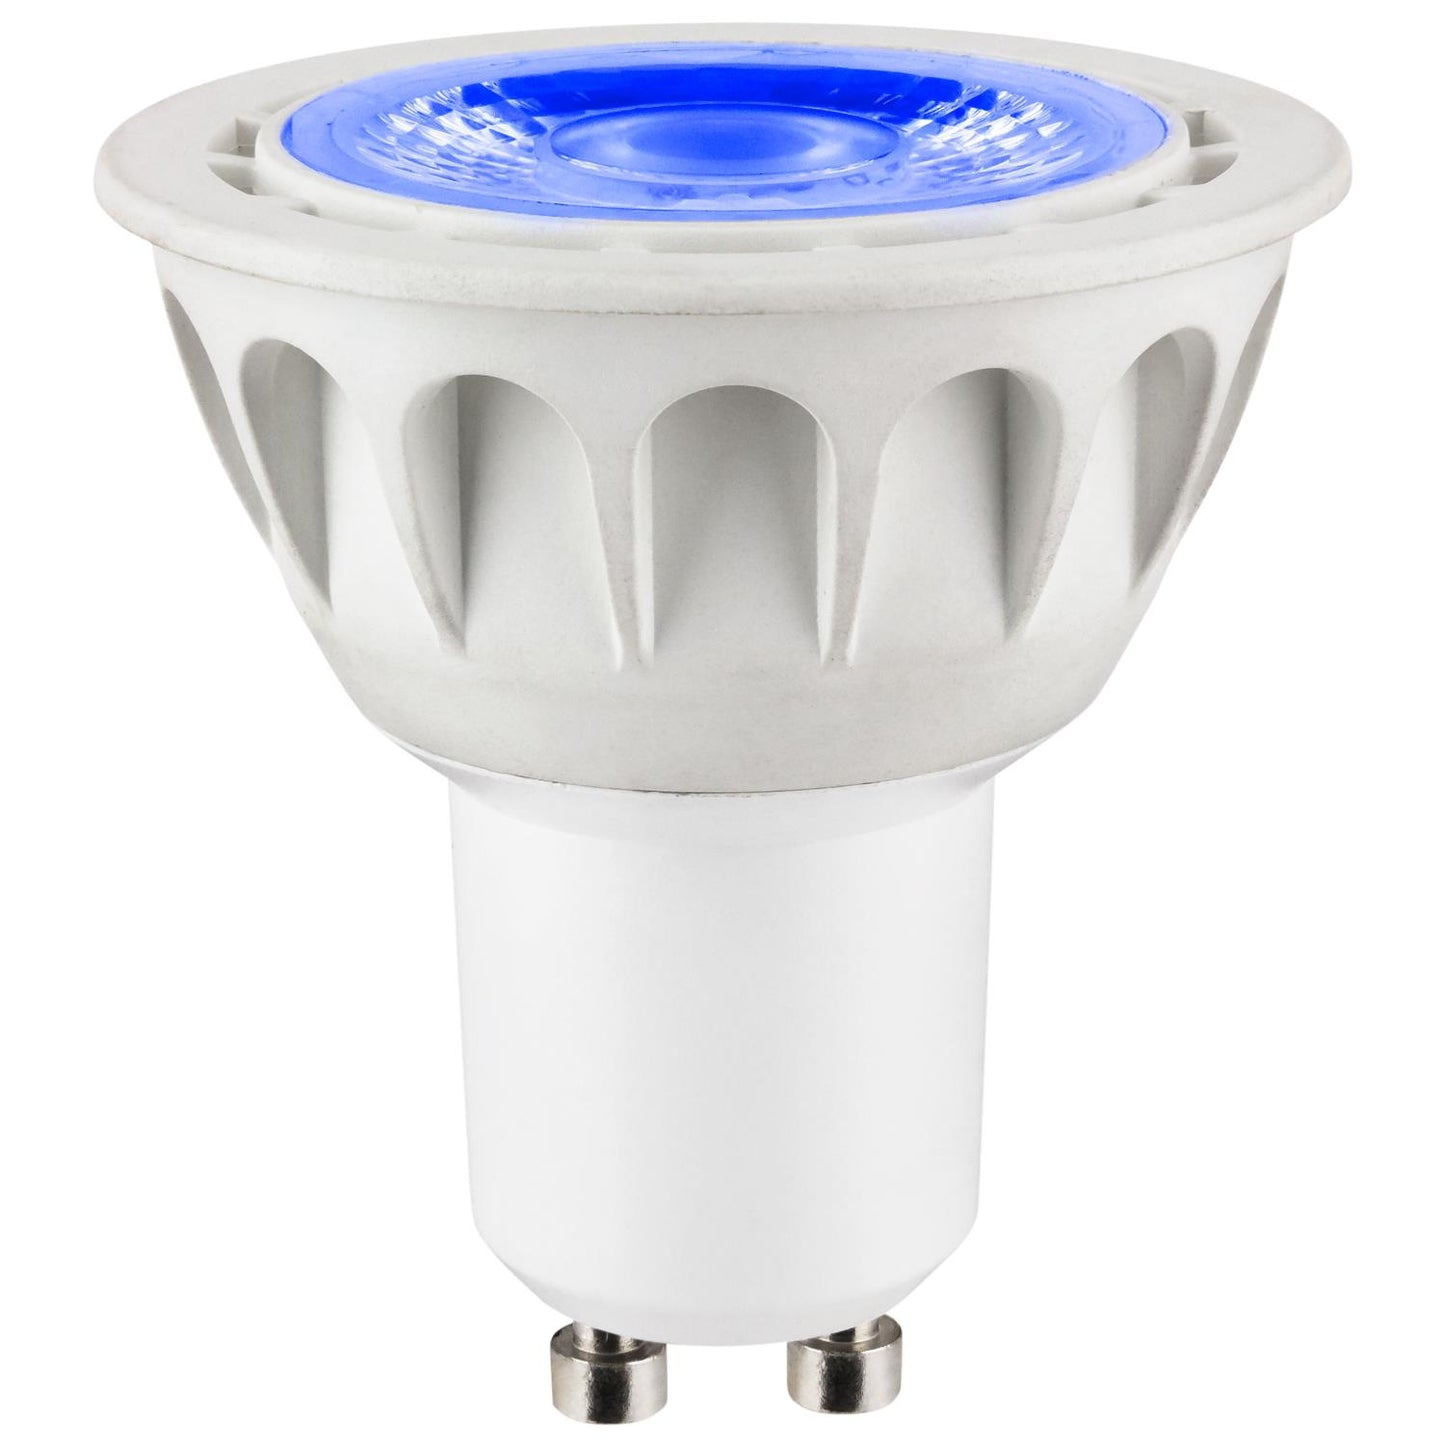 Sunlite 80520-SU LED PAR16 Light Bulb, 3 Watts (25W Equivalent), GU10 Base, 15,000 Hour Lifespan, 40 Degree Beam Angle Party Bulb, Blue 1 Pack